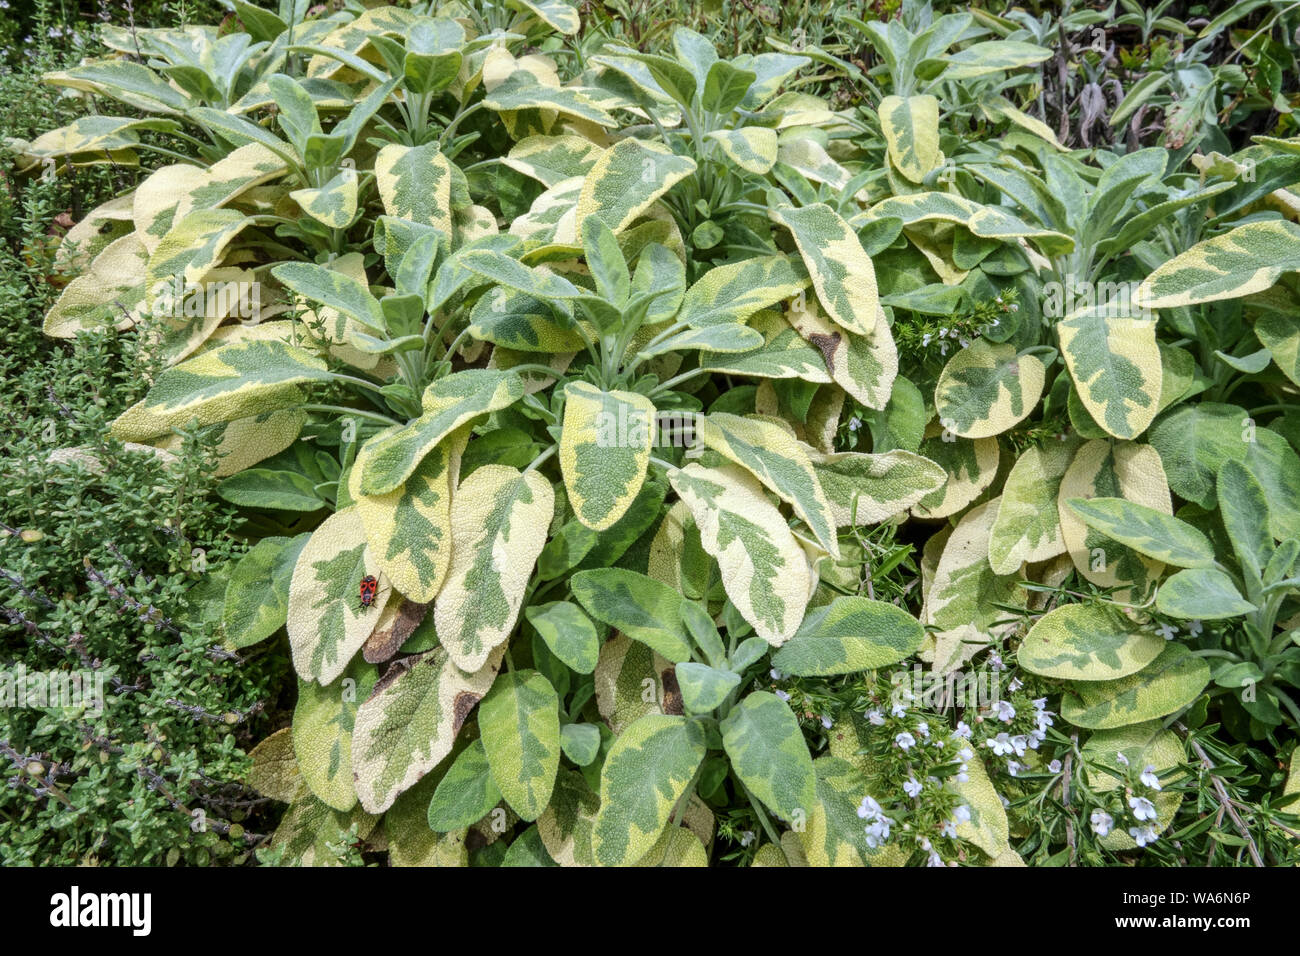 Salvia officinalis 'Icterina', Golden sage, Salvia leaves, garden herb culinary herbs growing herbs Stock Photo